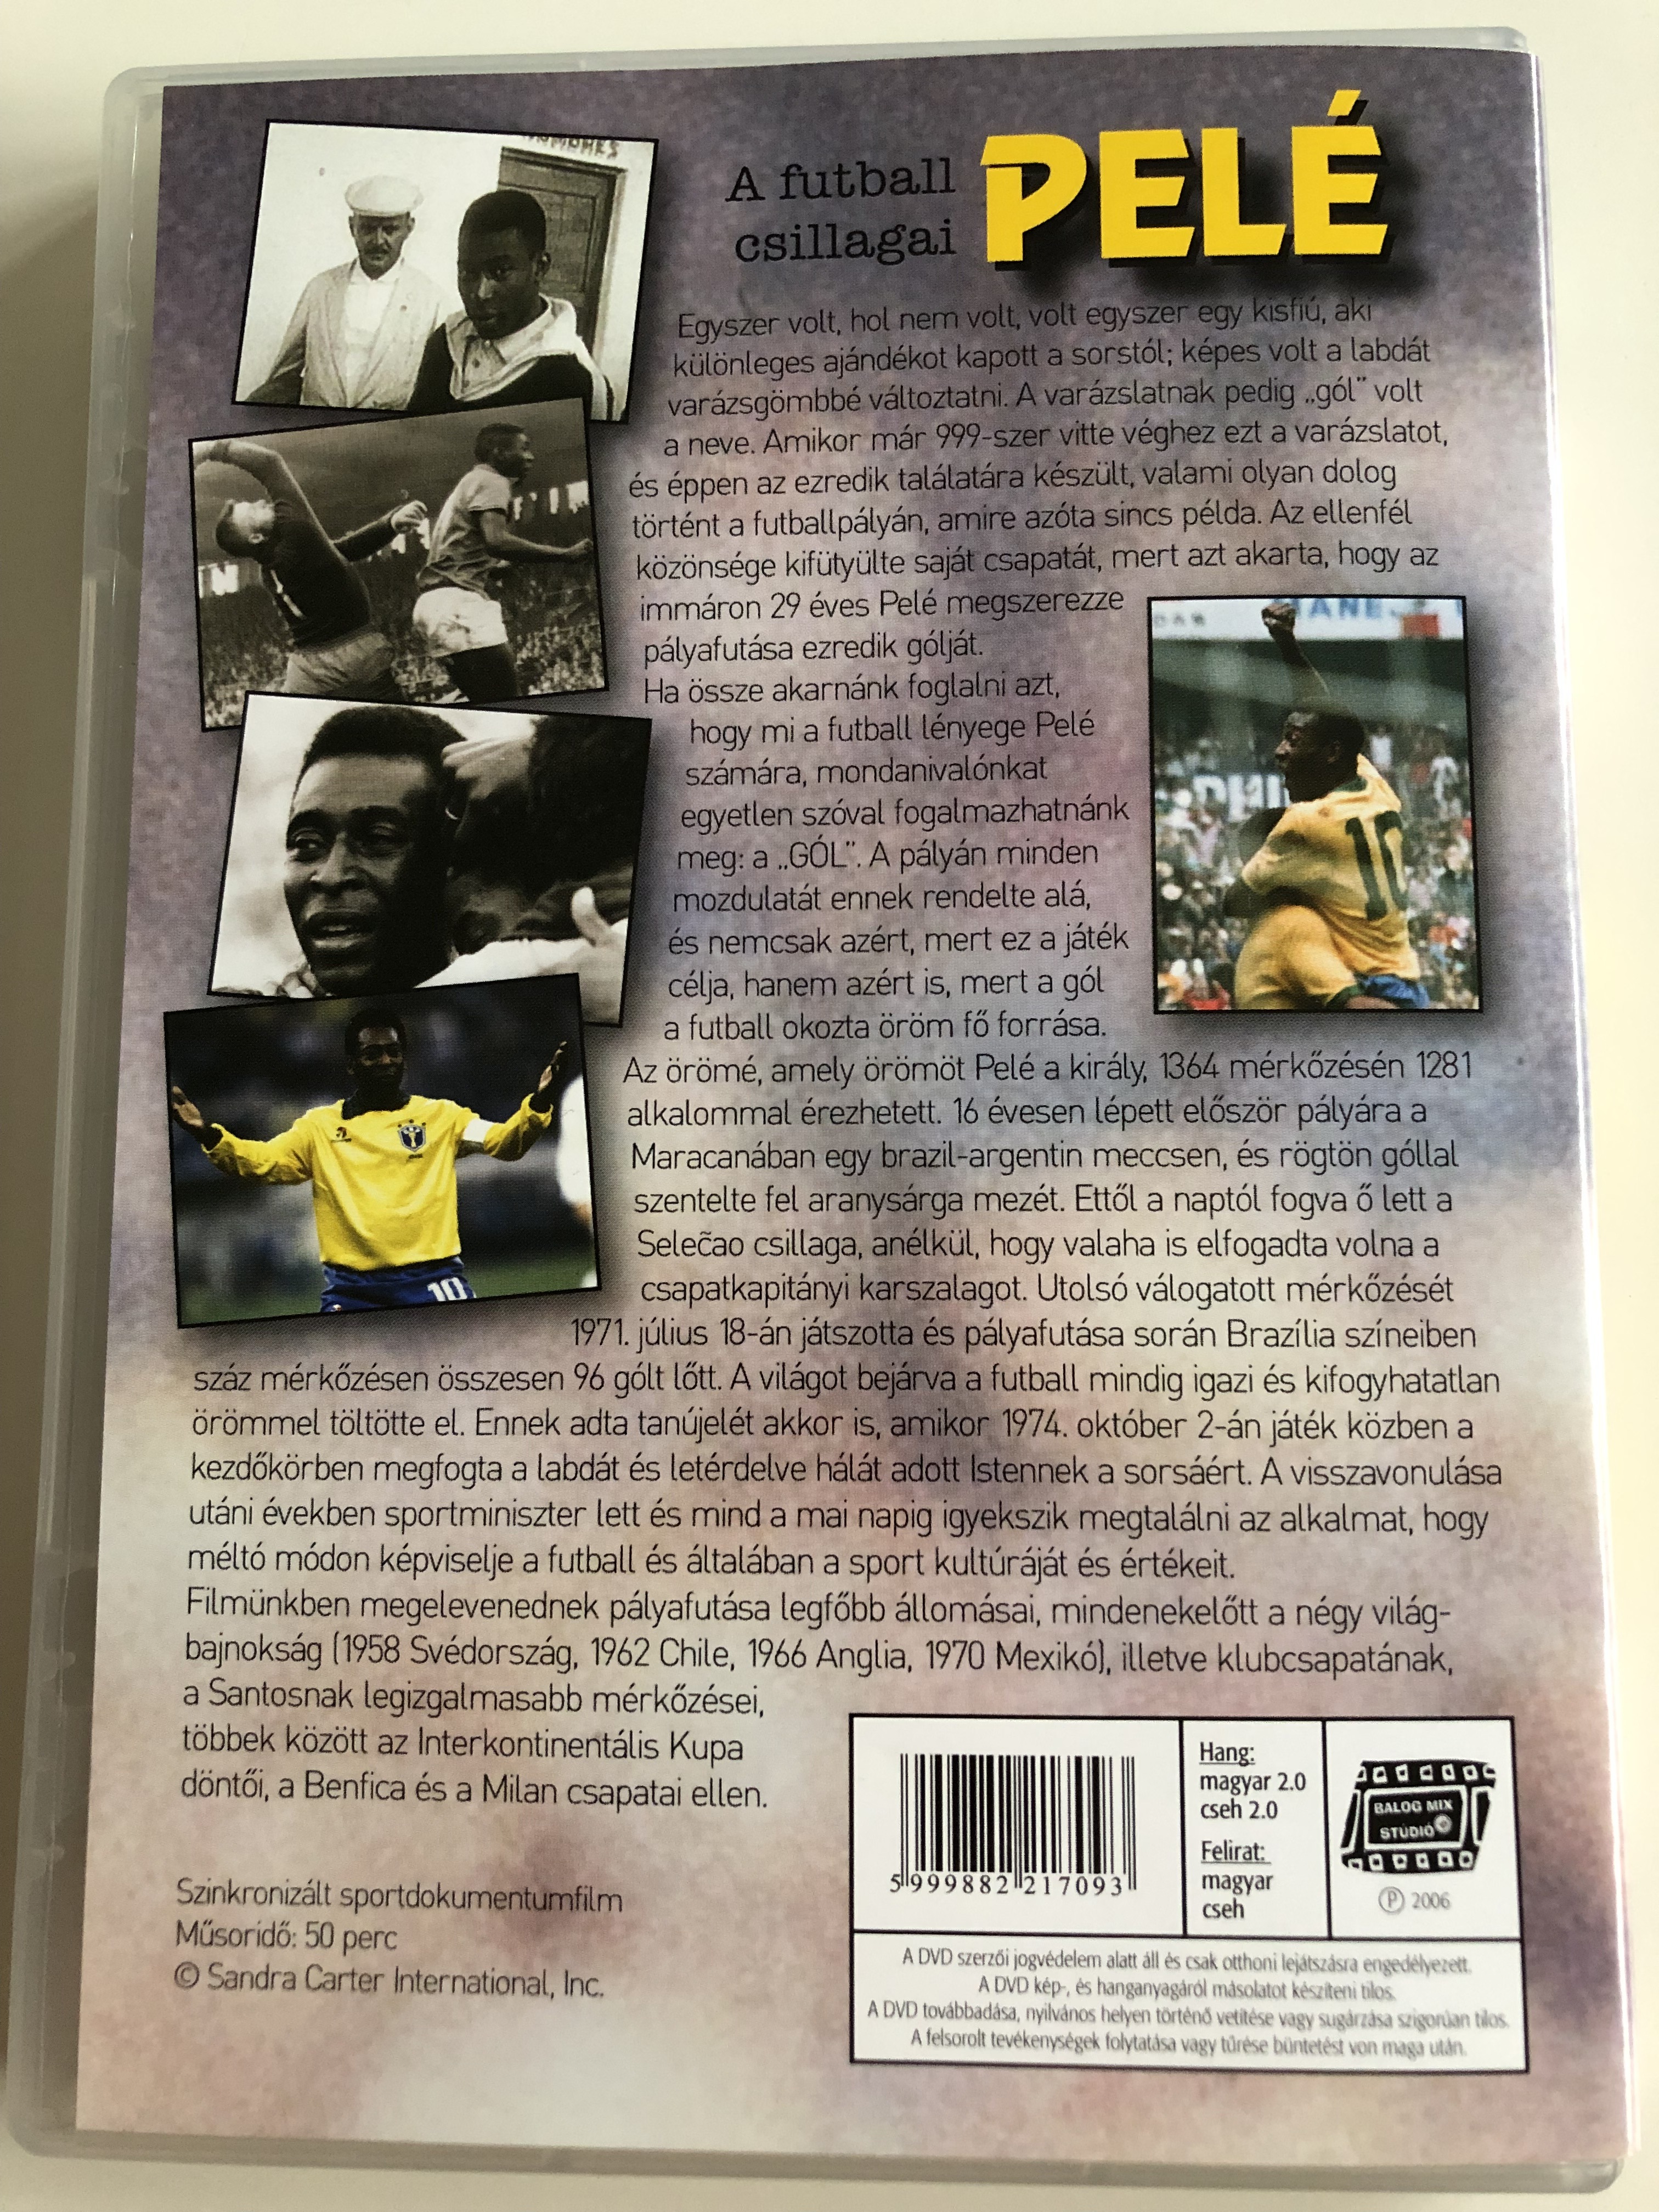 a-futball-csillagai-pel-dvd-2006-stars-of-soccer-pel-documentary-about-the-soccer-legend-pel-2-.jpg